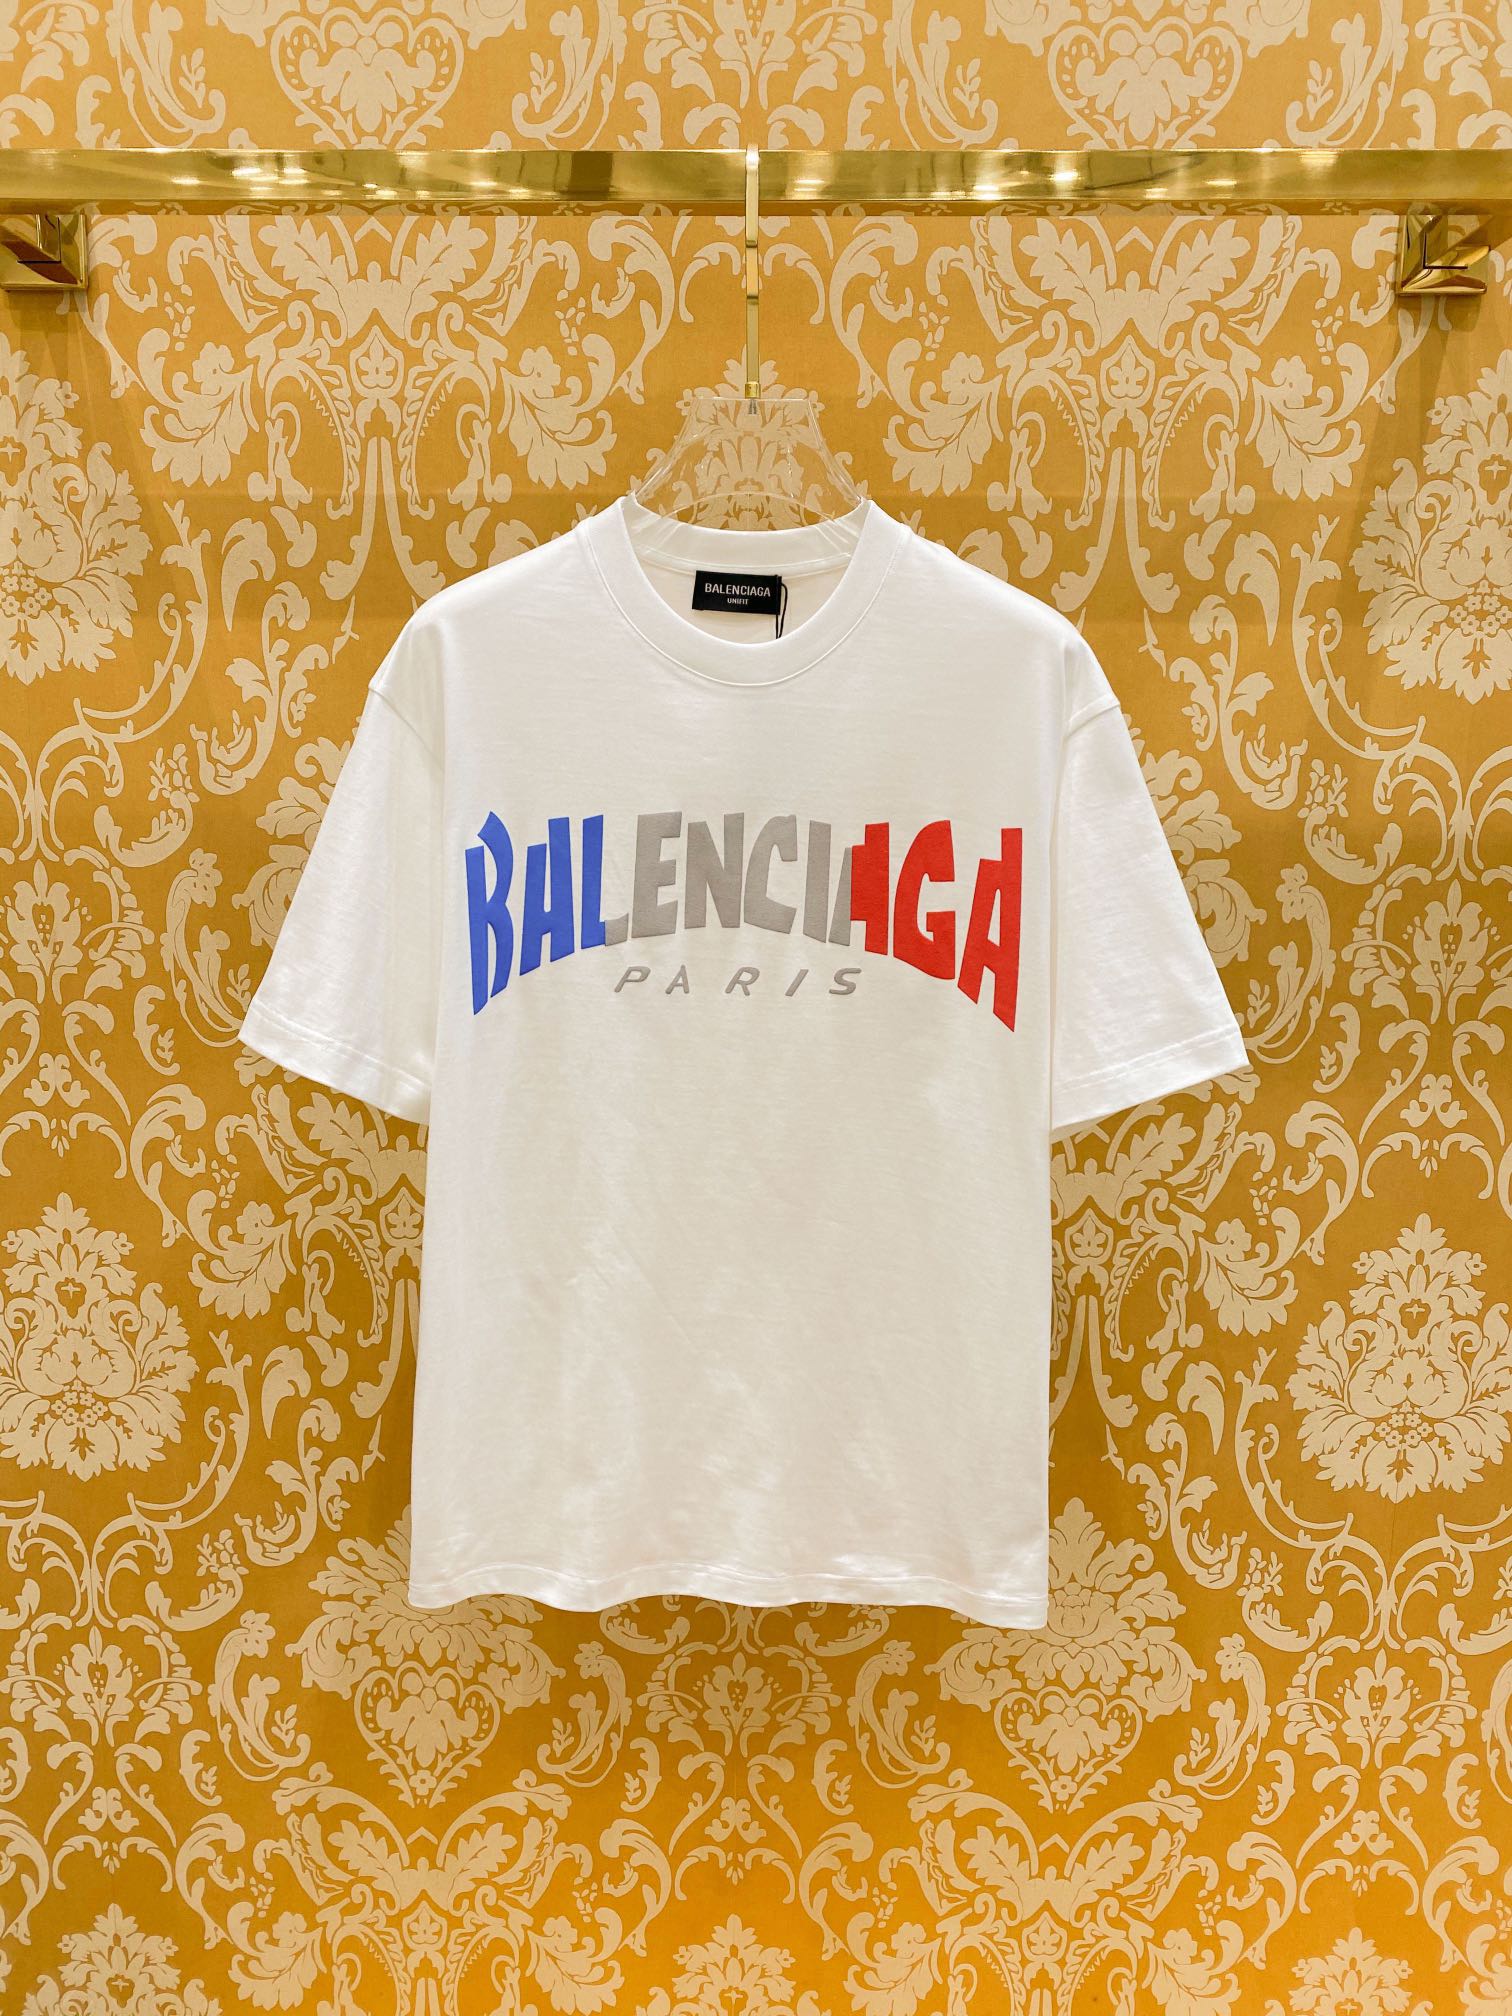 Balenciaga Clothing T-Shirt Cotton Mercerized Spring/Summer Collection Fashion Short Sleeve